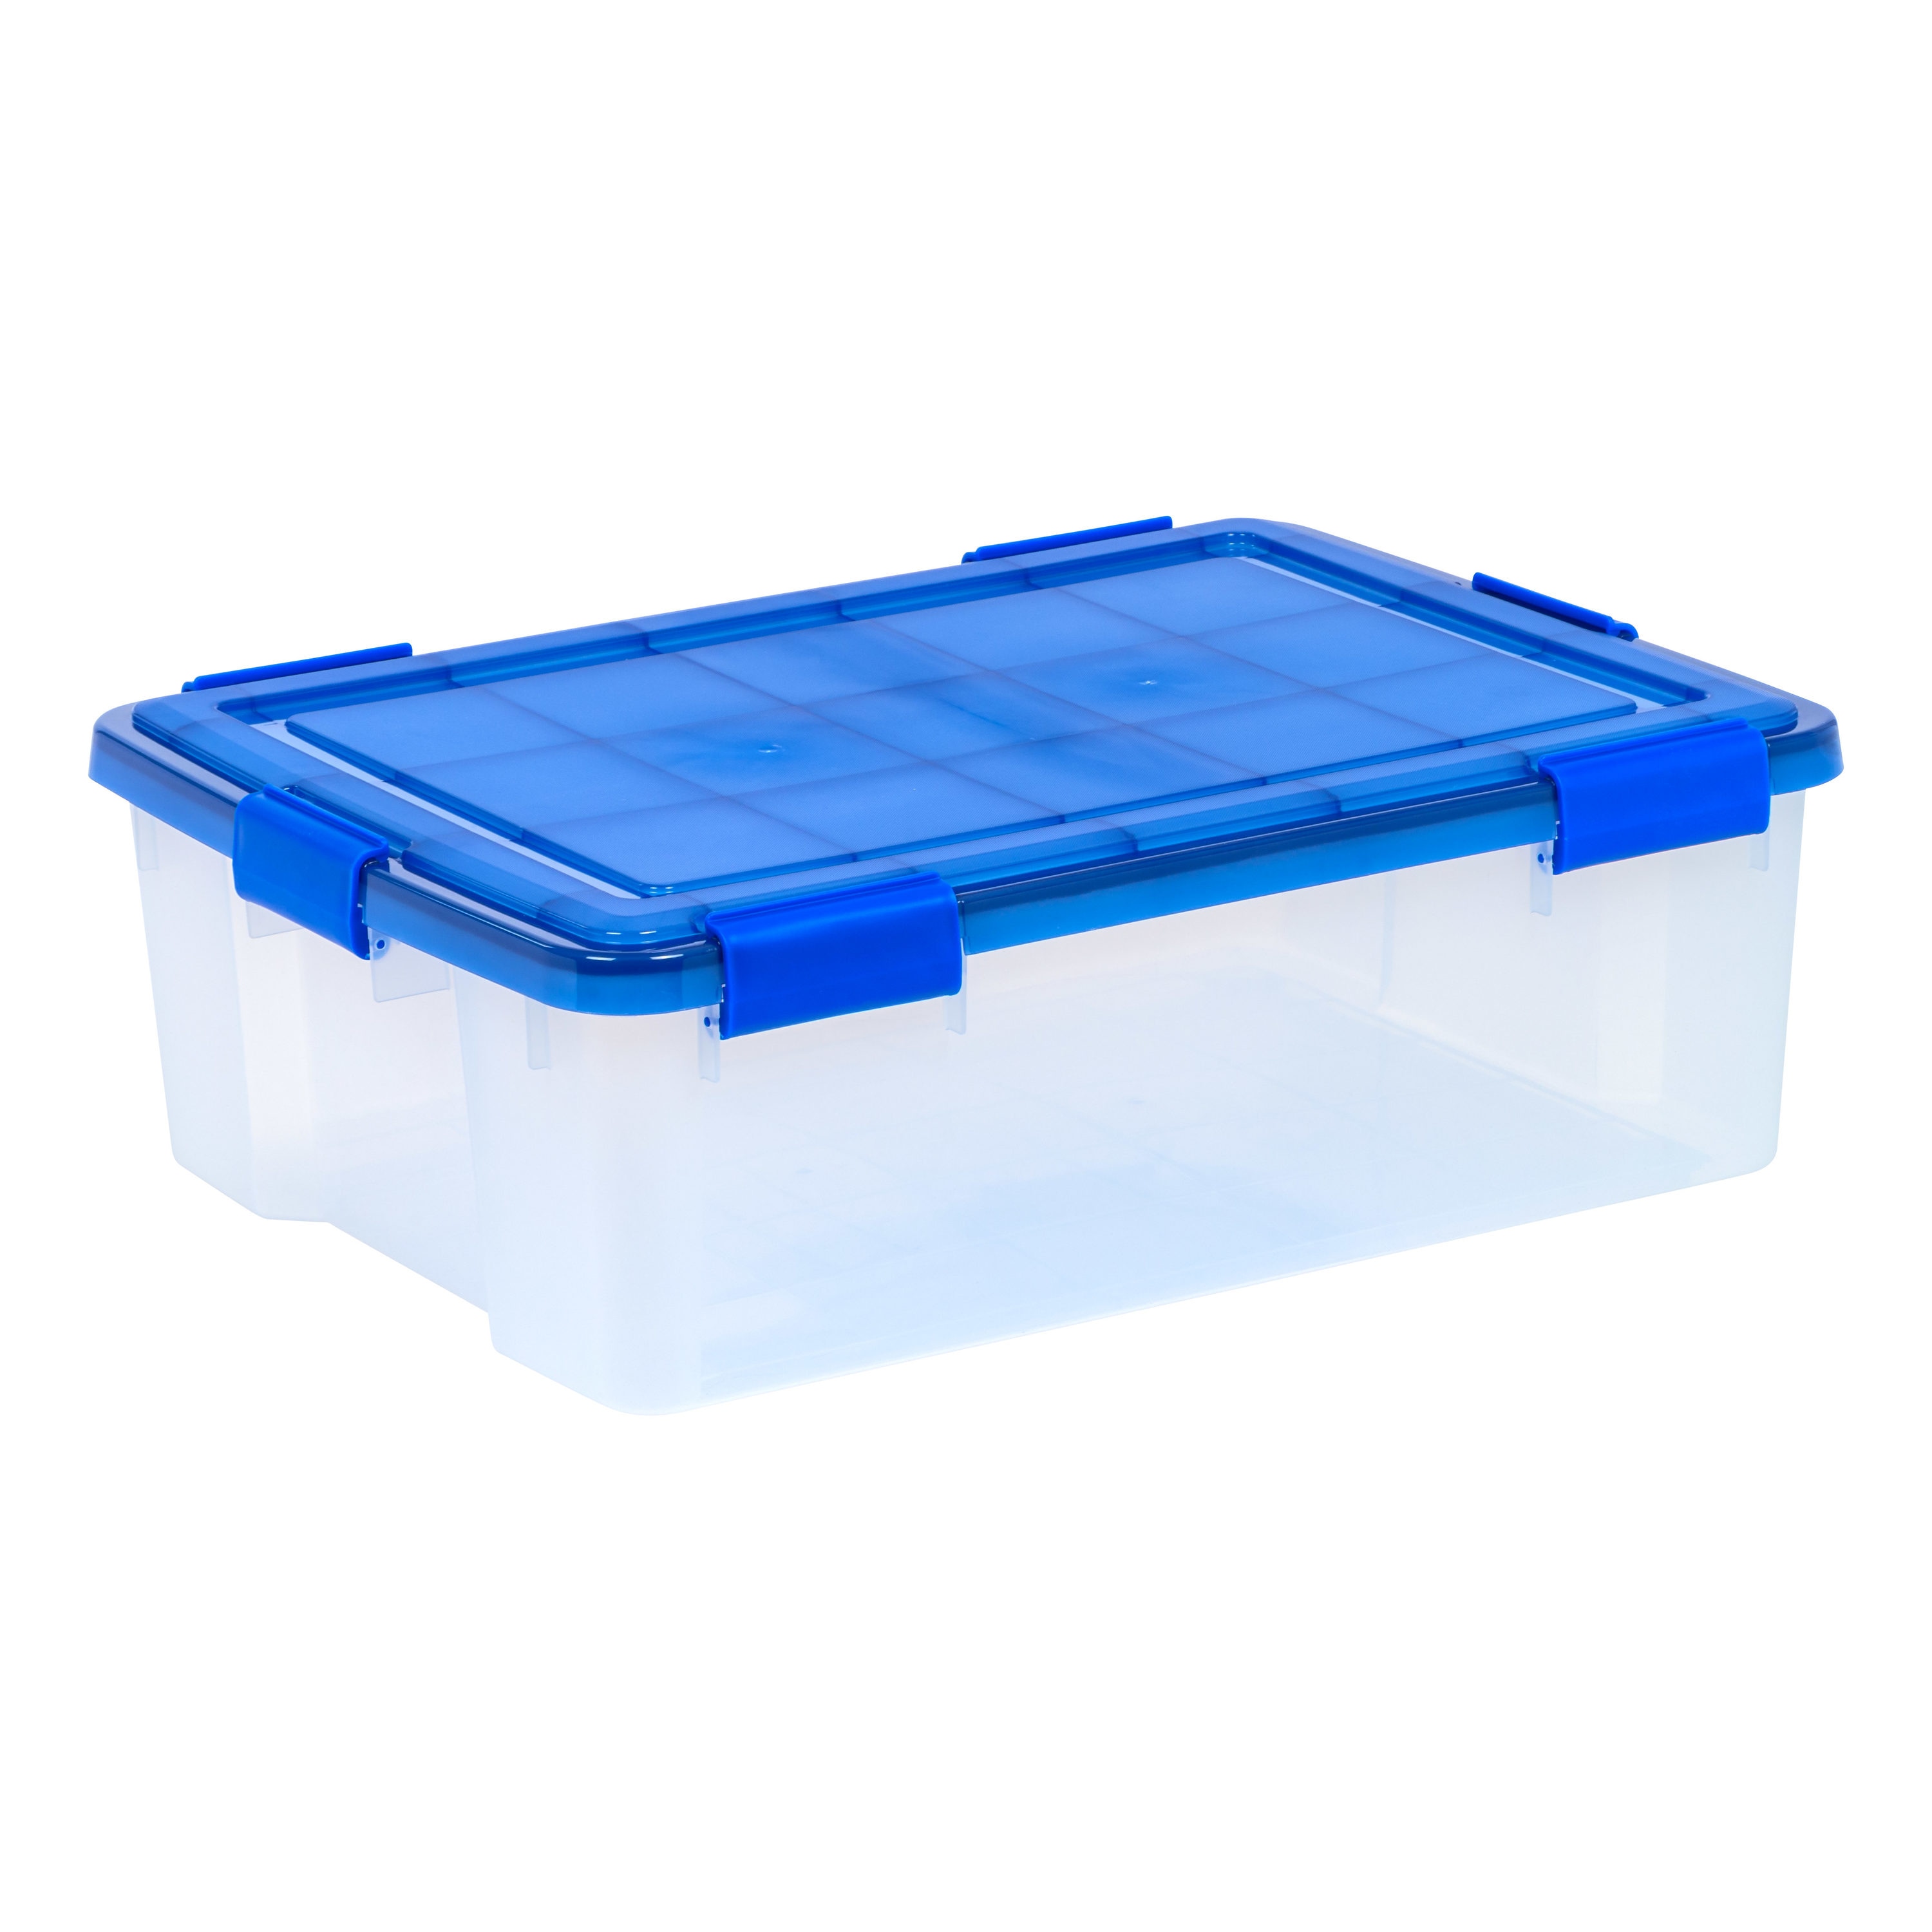 Iris USA Portable Project Case for 8 x 8 Paper - ShopStyle Baskets & Boxes